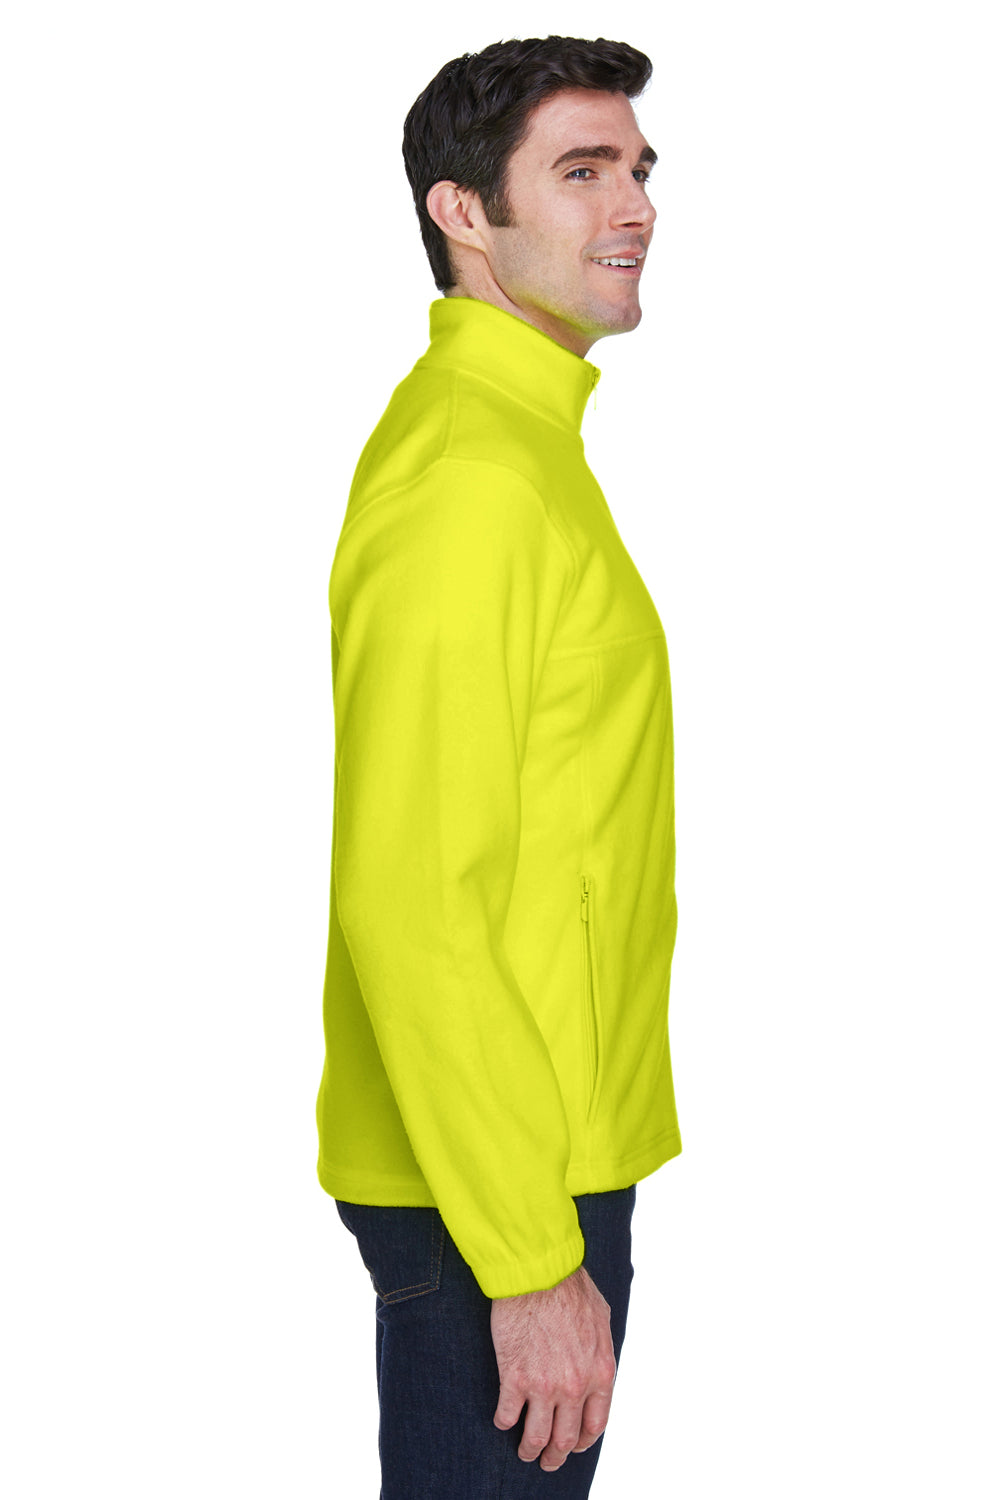 Harriton M990 Mens Full Zip Fleece Jacket Safety Yellow Side